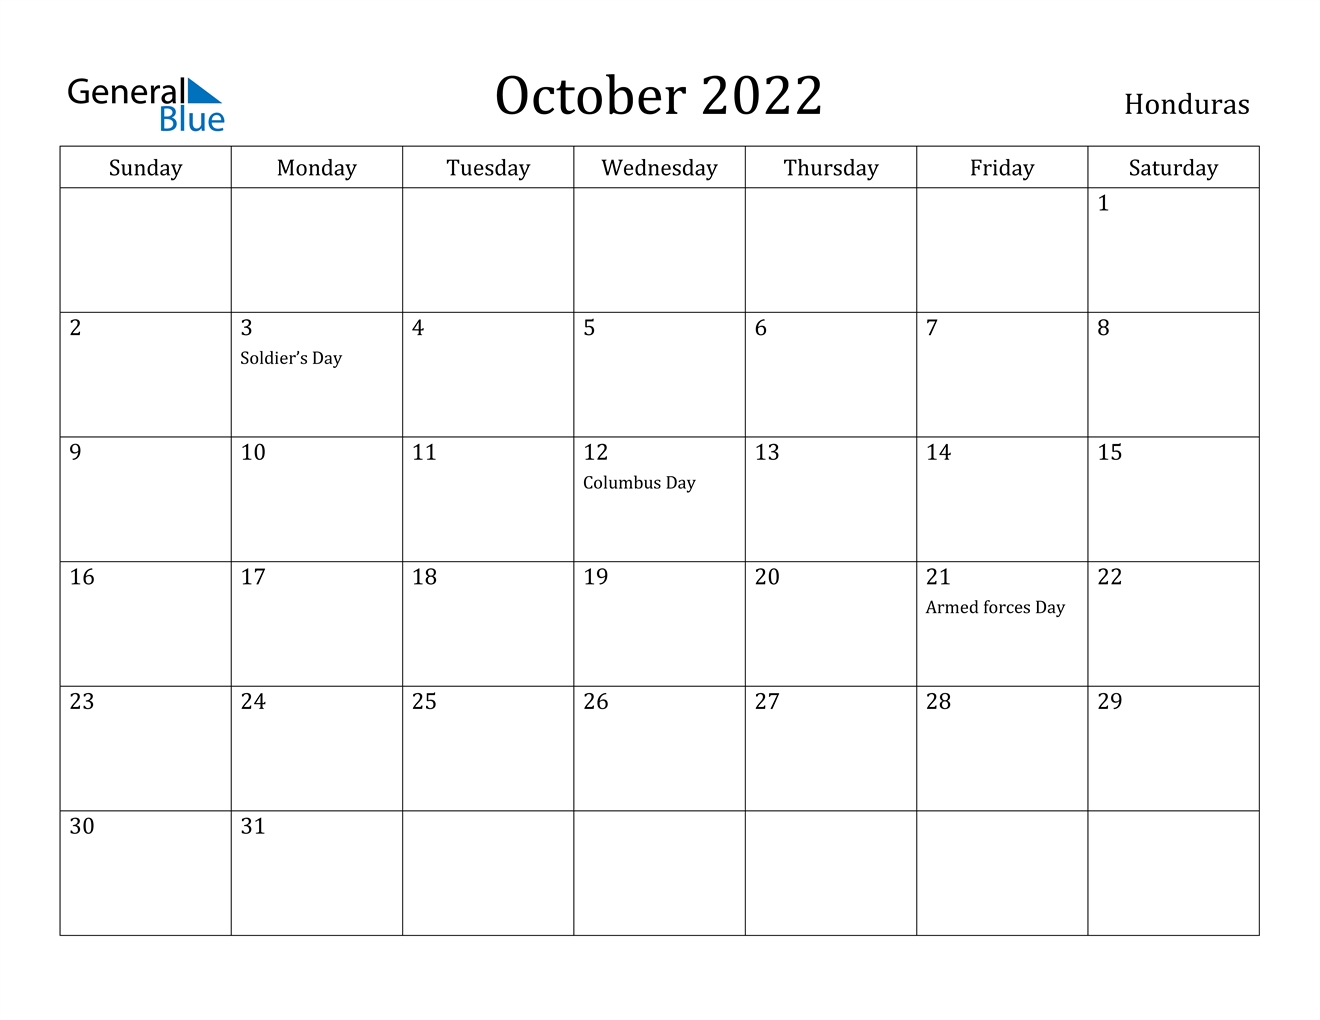 October 2022 Calendar - Honduras